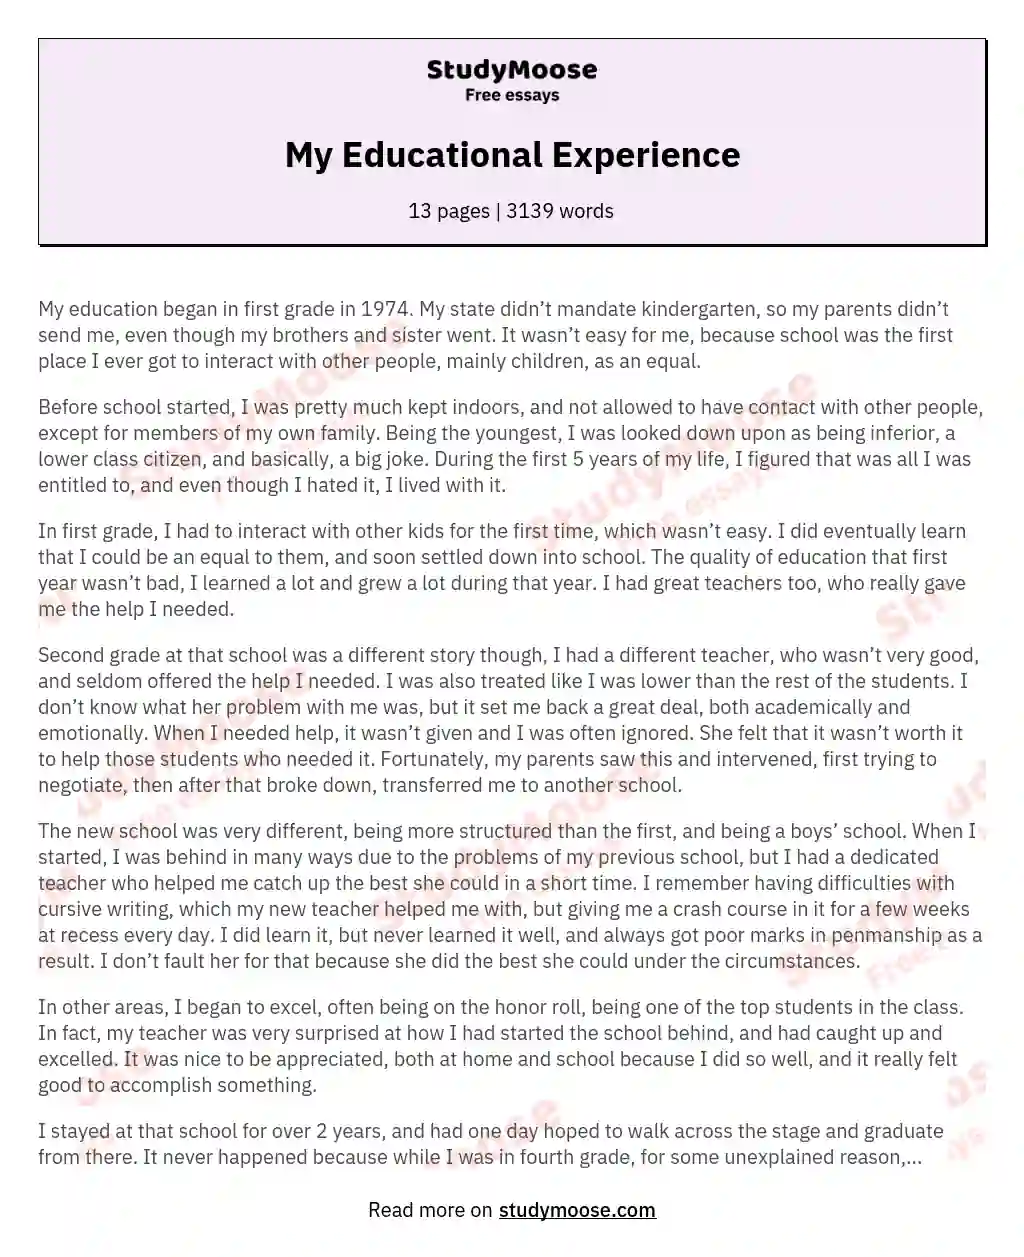 My Educational Experience essay